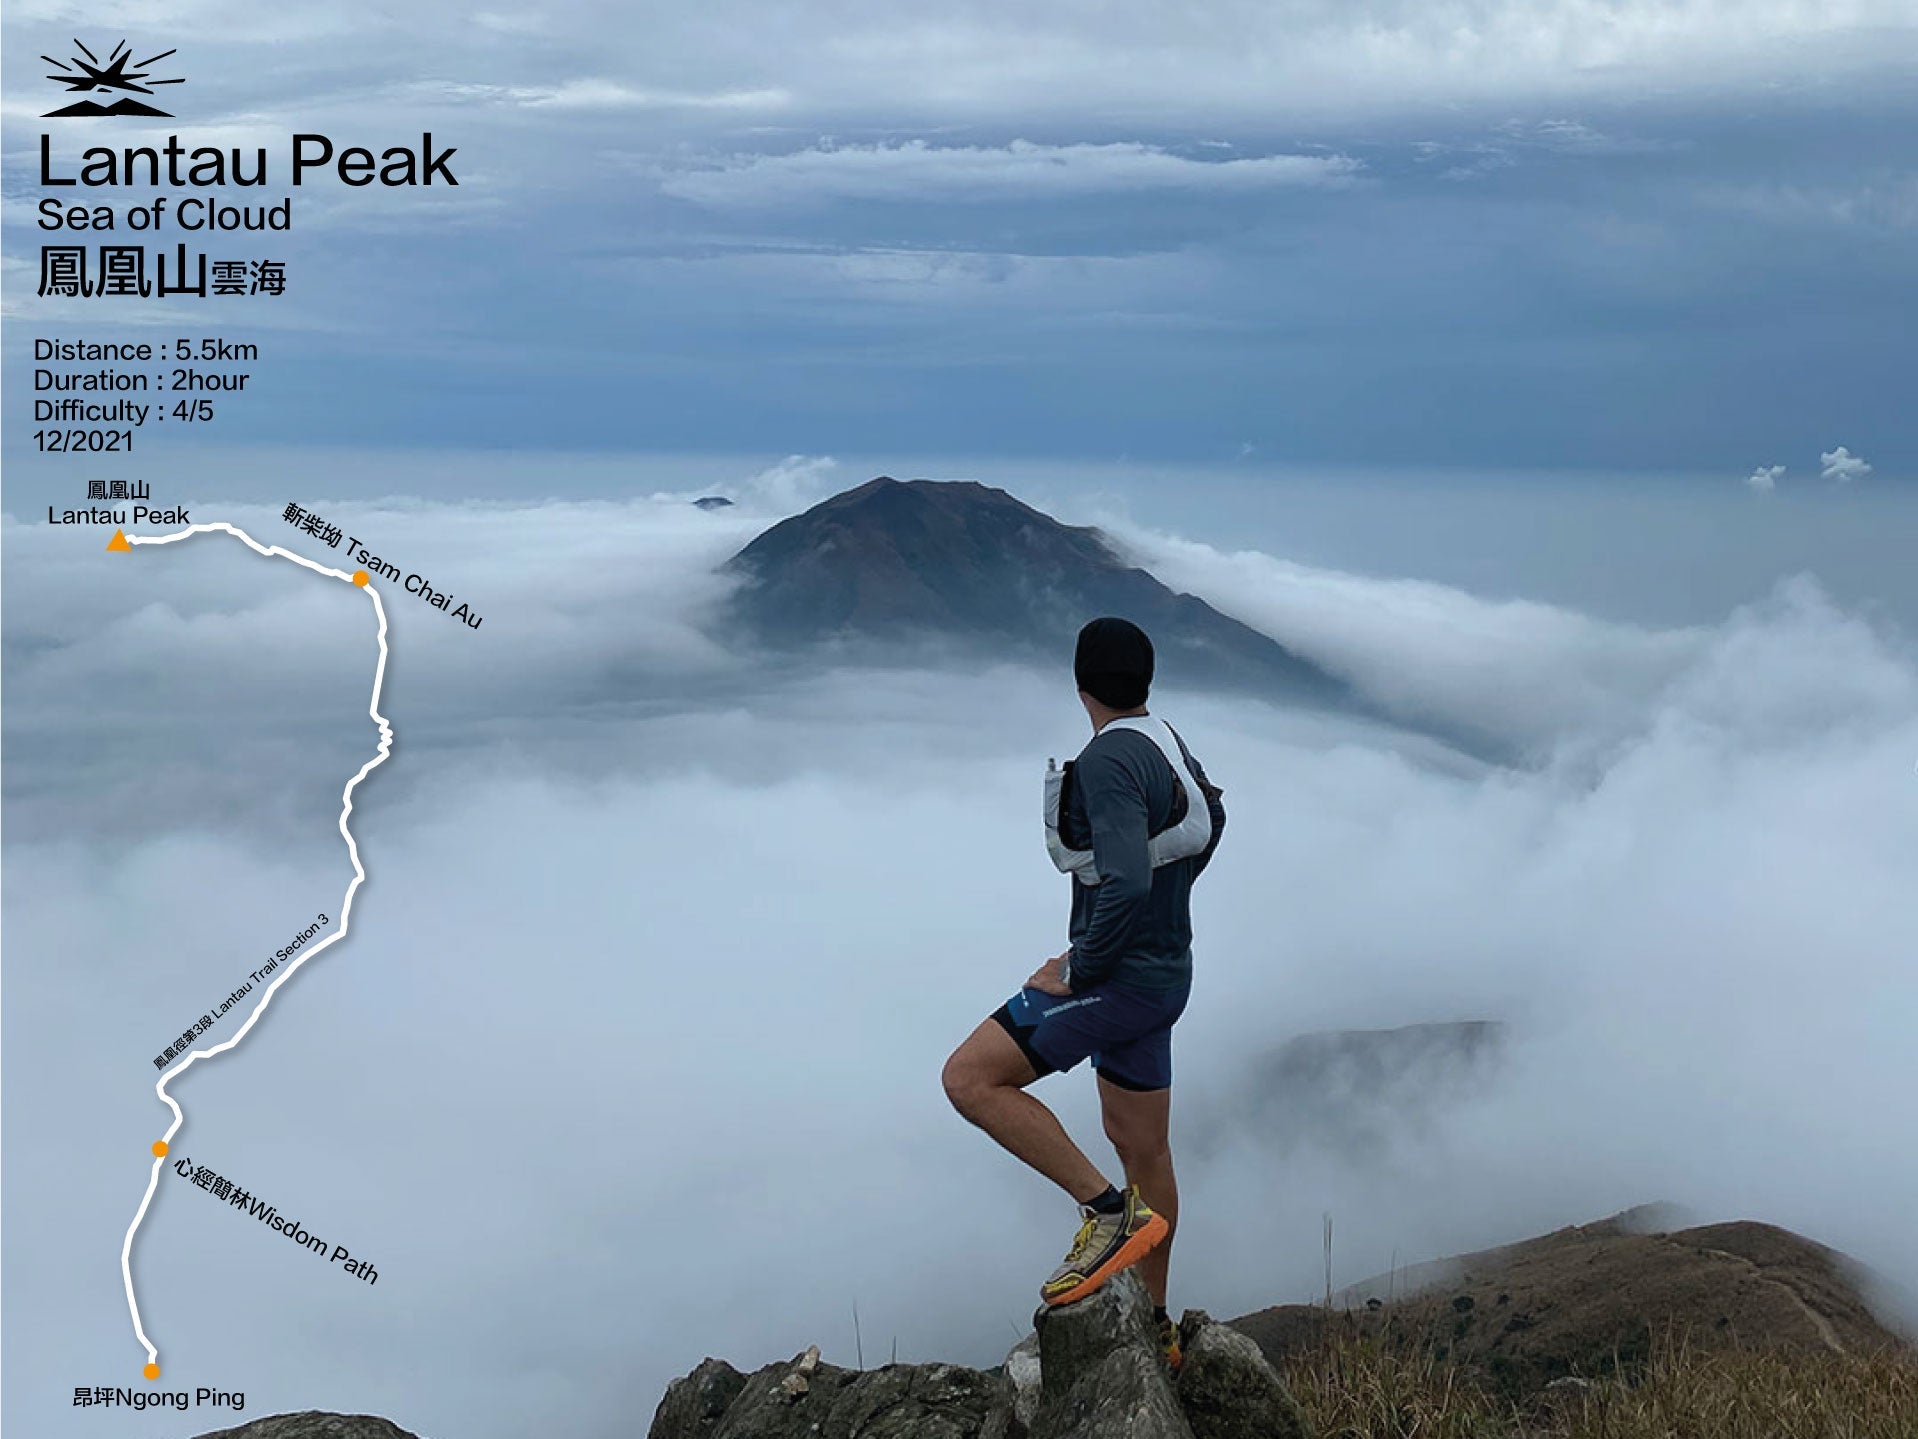 Lantau Peak 934m - Sea of clouds